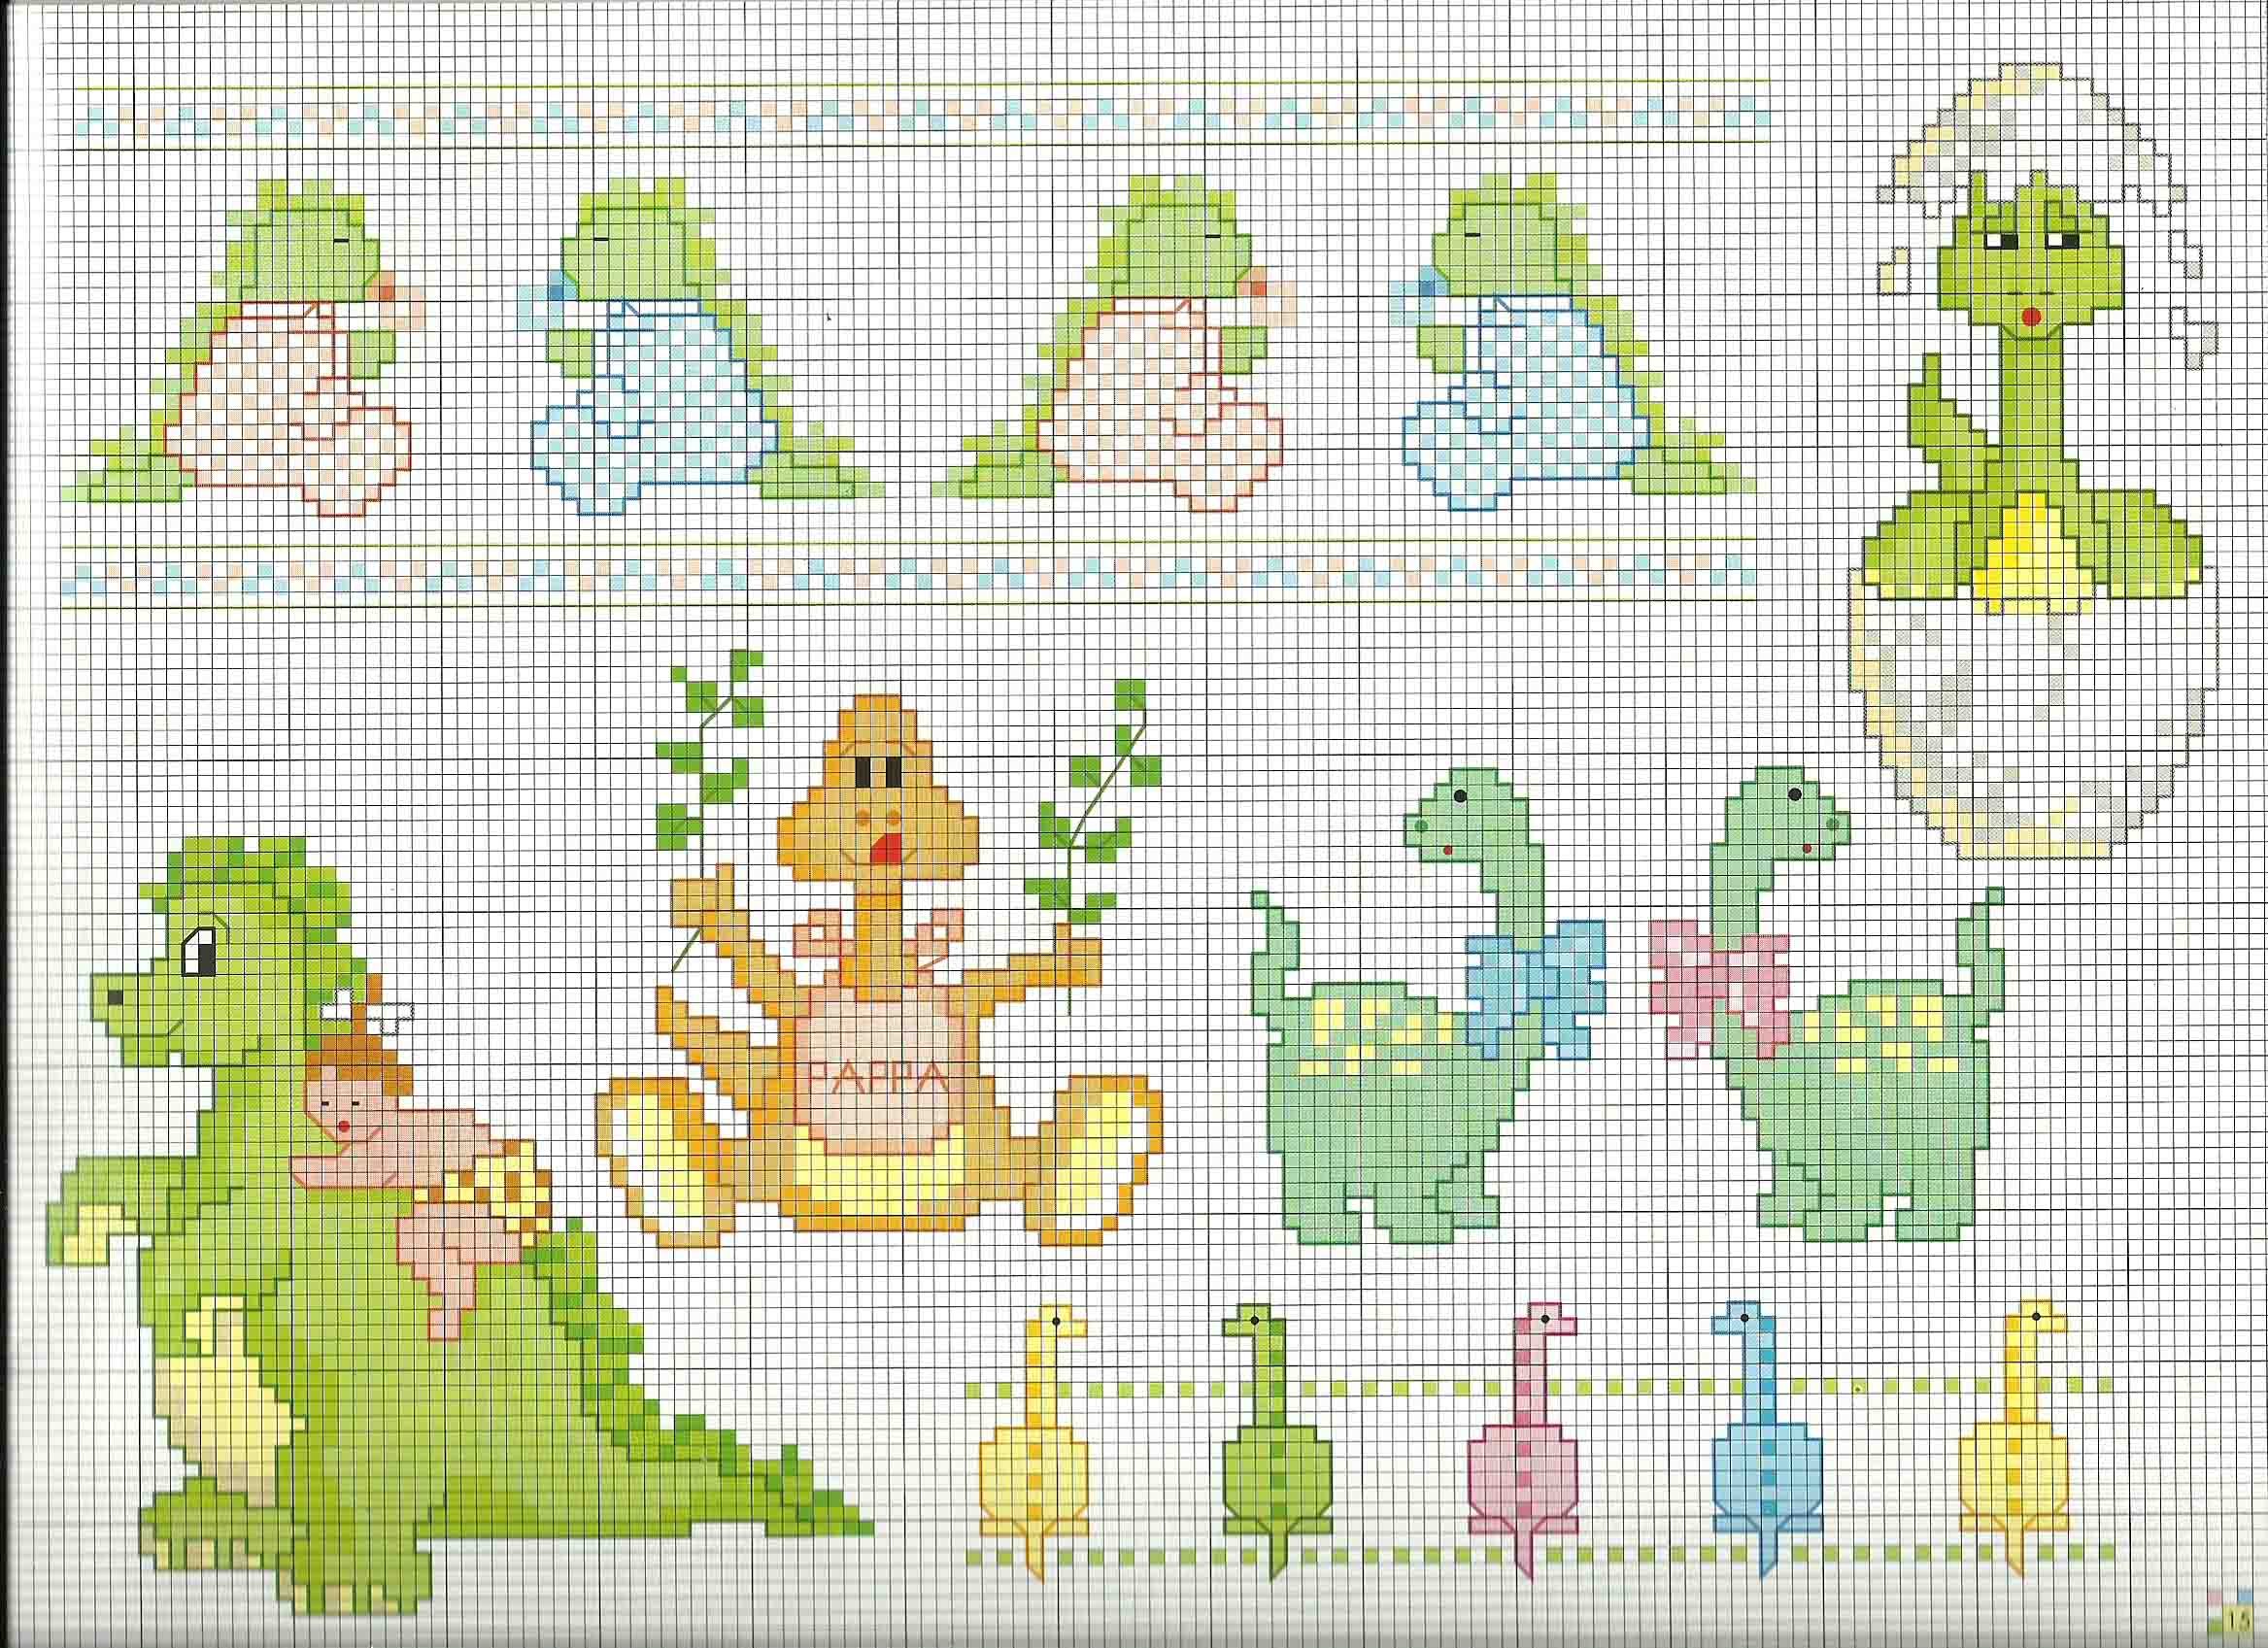 Baby dinosaurs cross stitch patterns - free cross stitch patterns crochet  knitting amigurumi